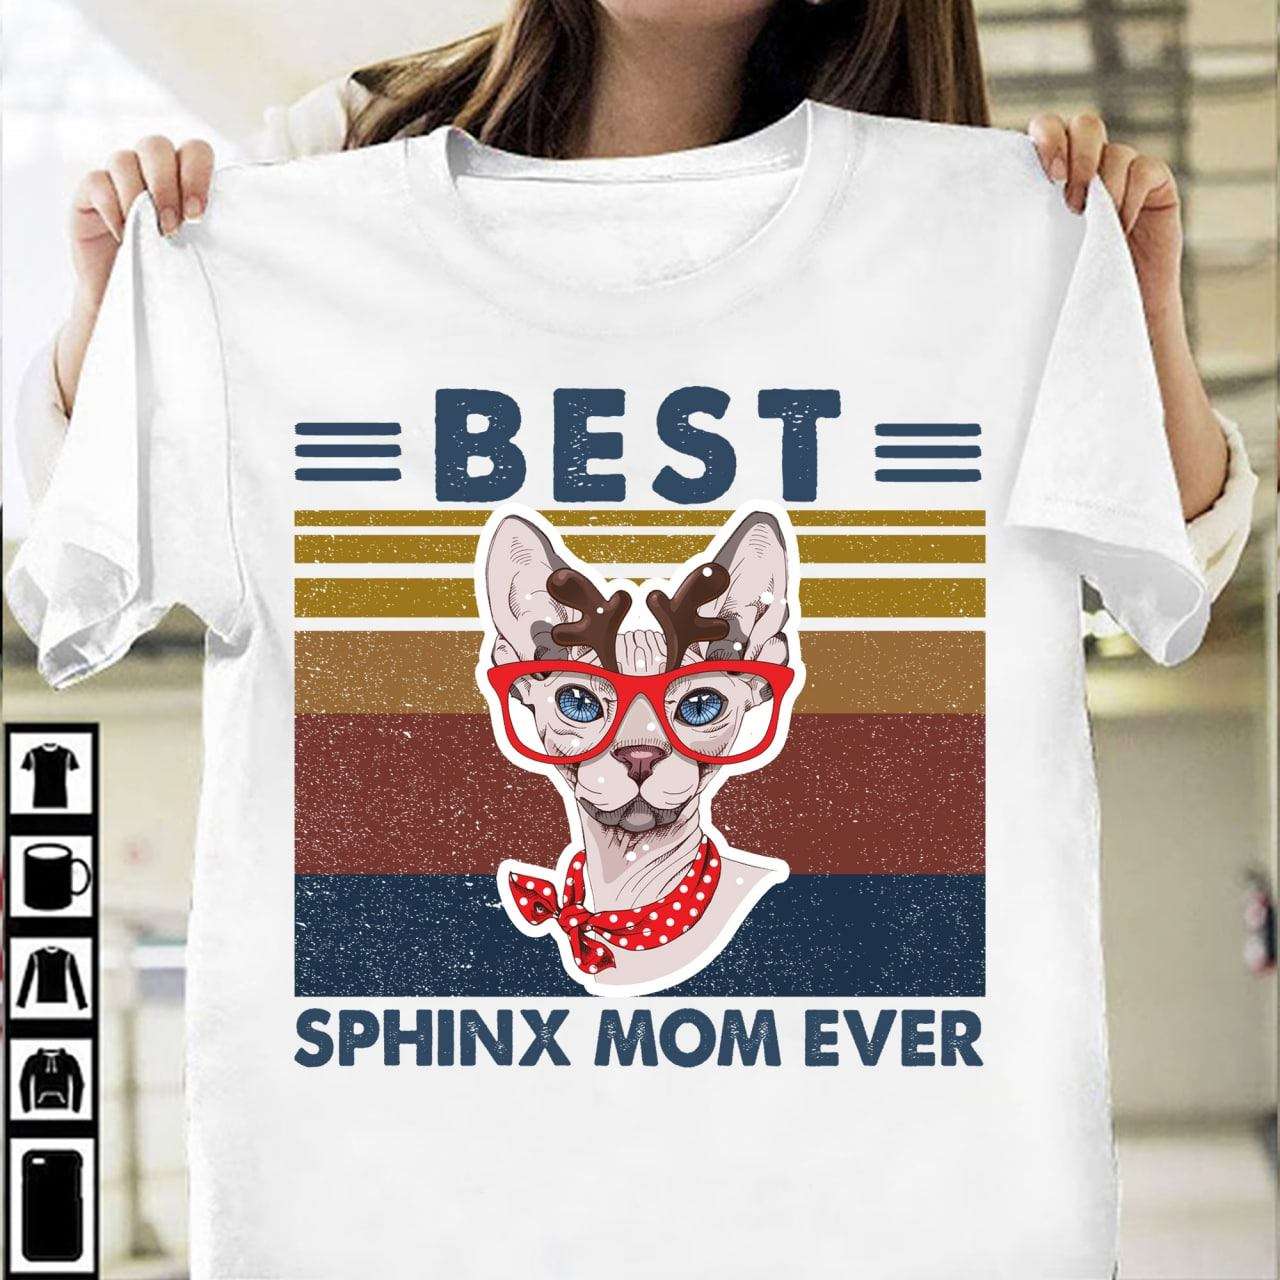 Best Sphynx mom ever - Sphynx cat, mother loves Sphynx cat